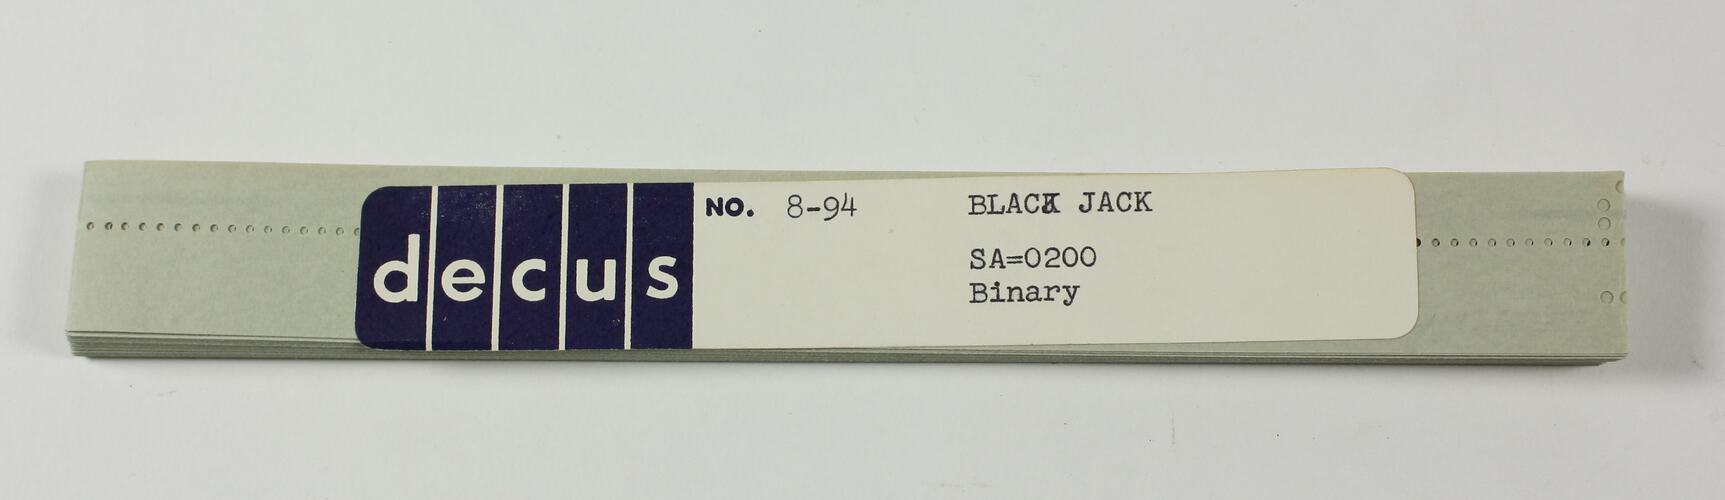 Paper Tape - DECUS, '8-94 Black Jack, SA=0200, Binary'